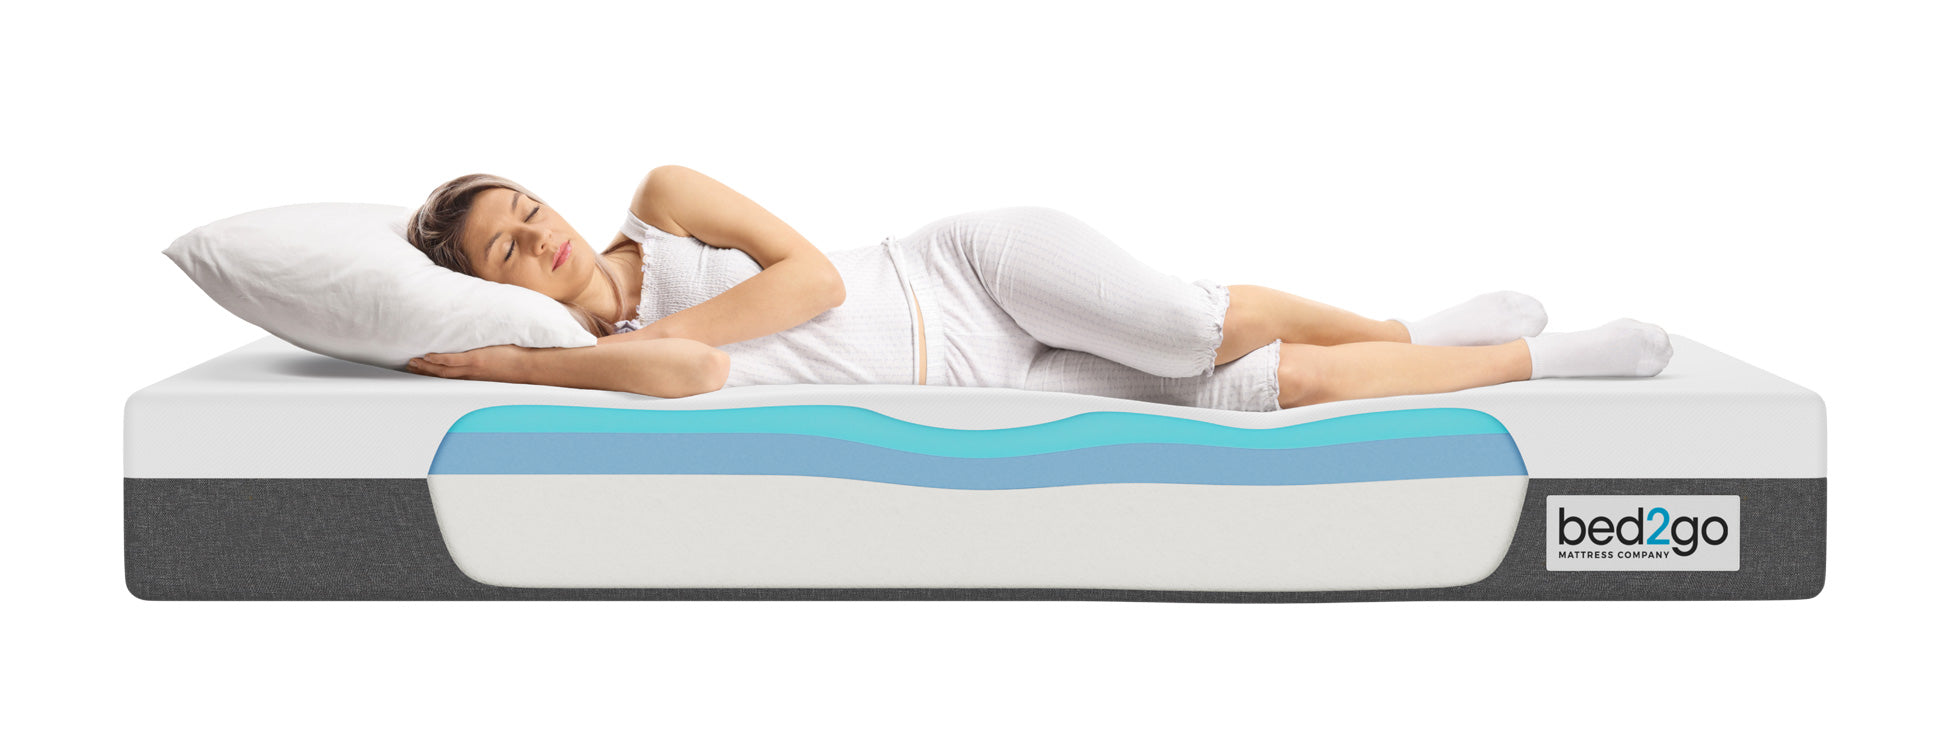 bed2go-mattress-made-in-canada-memory-foam-mattress-twin-xl-full-queen-king-free-shipping-canadawoman-side